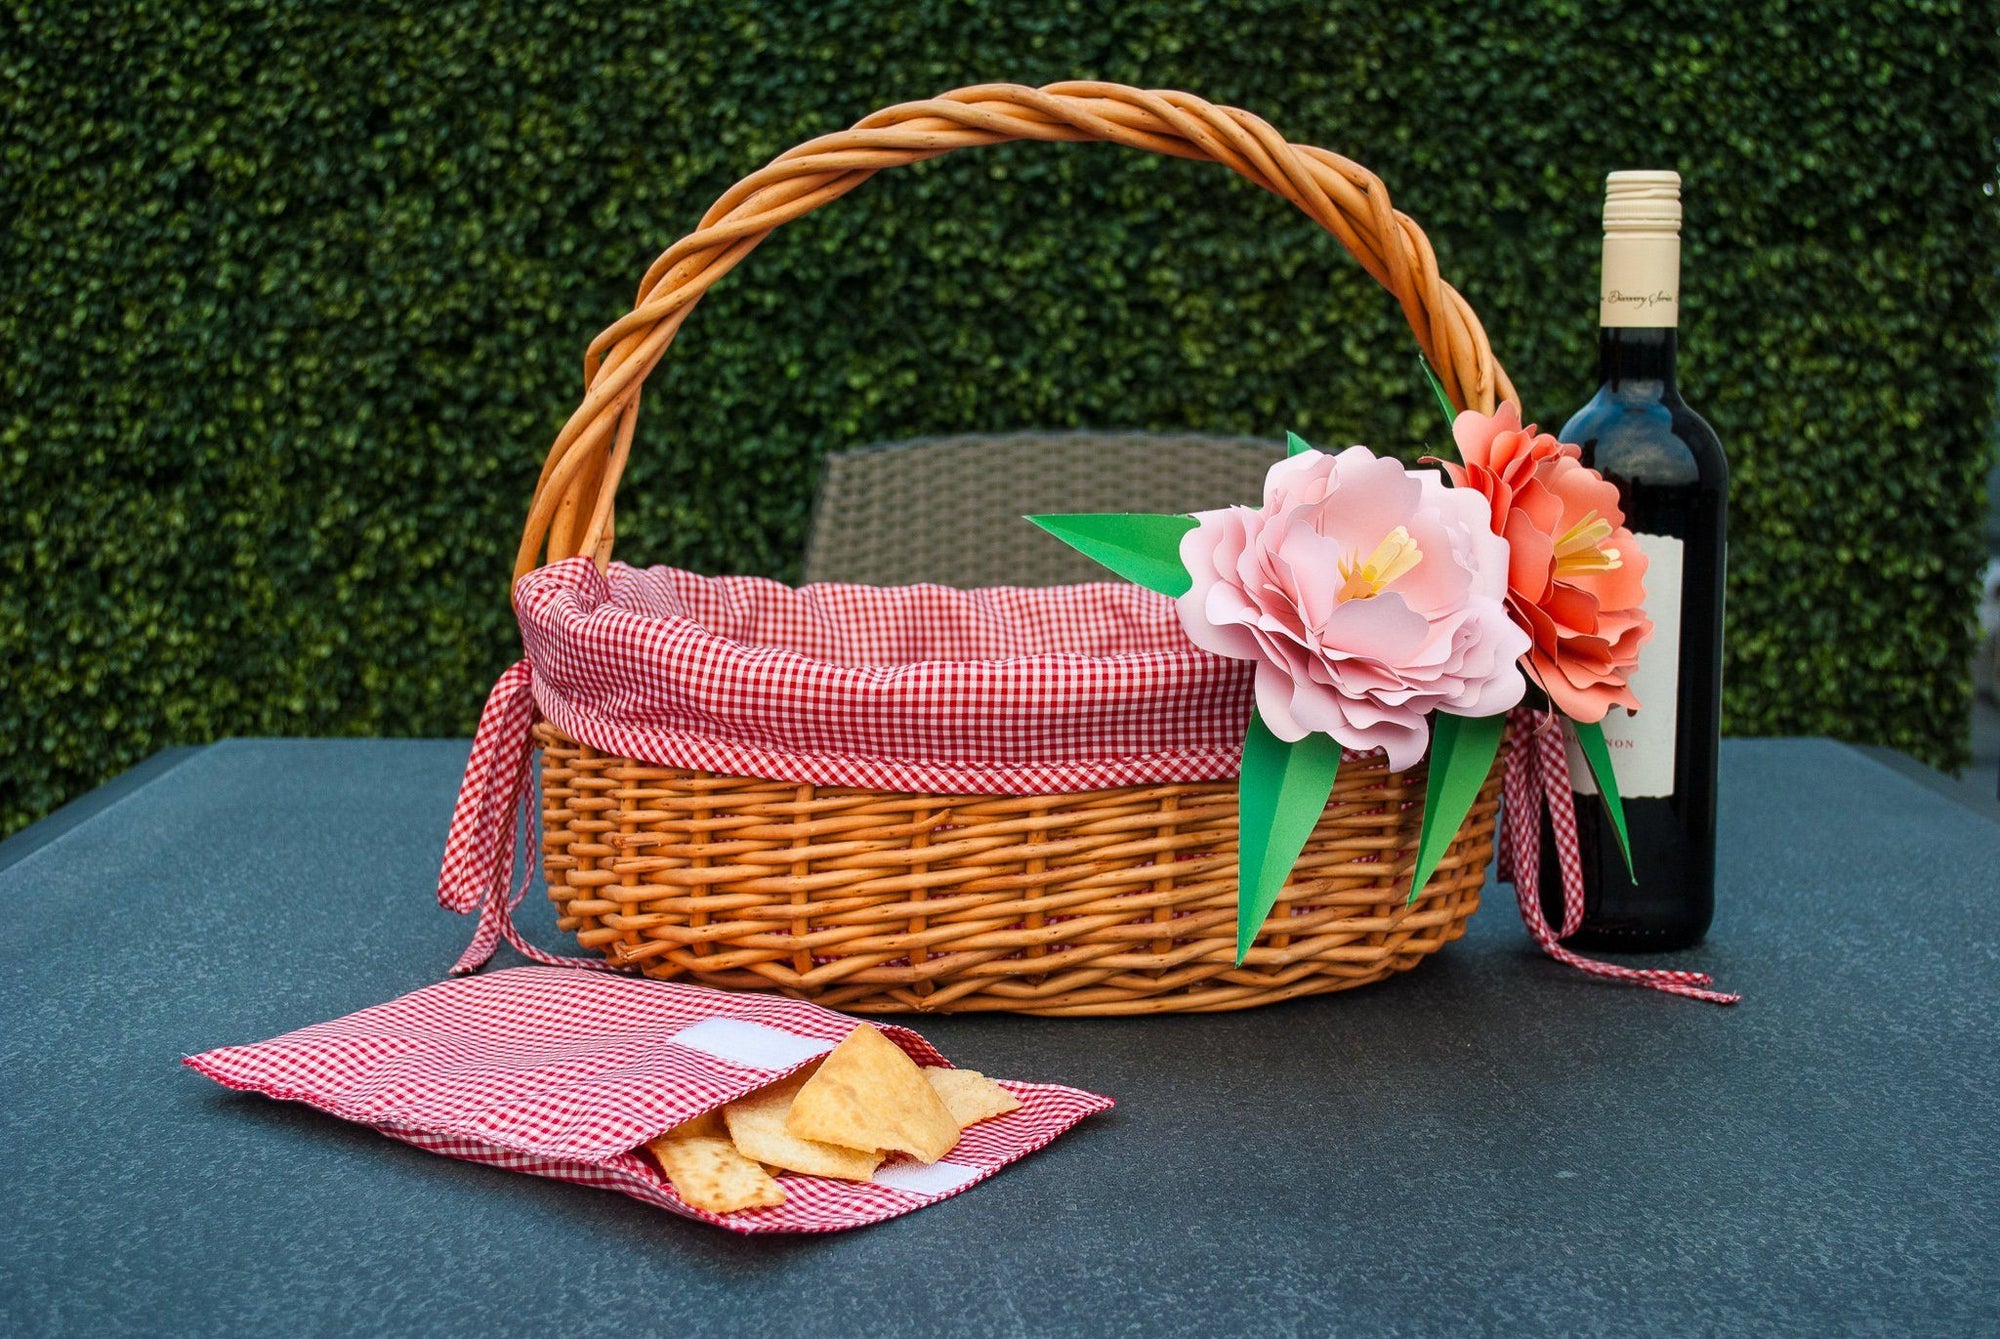 DIY Wicker Basket Liner and Reusable Snack Bag Tutorial